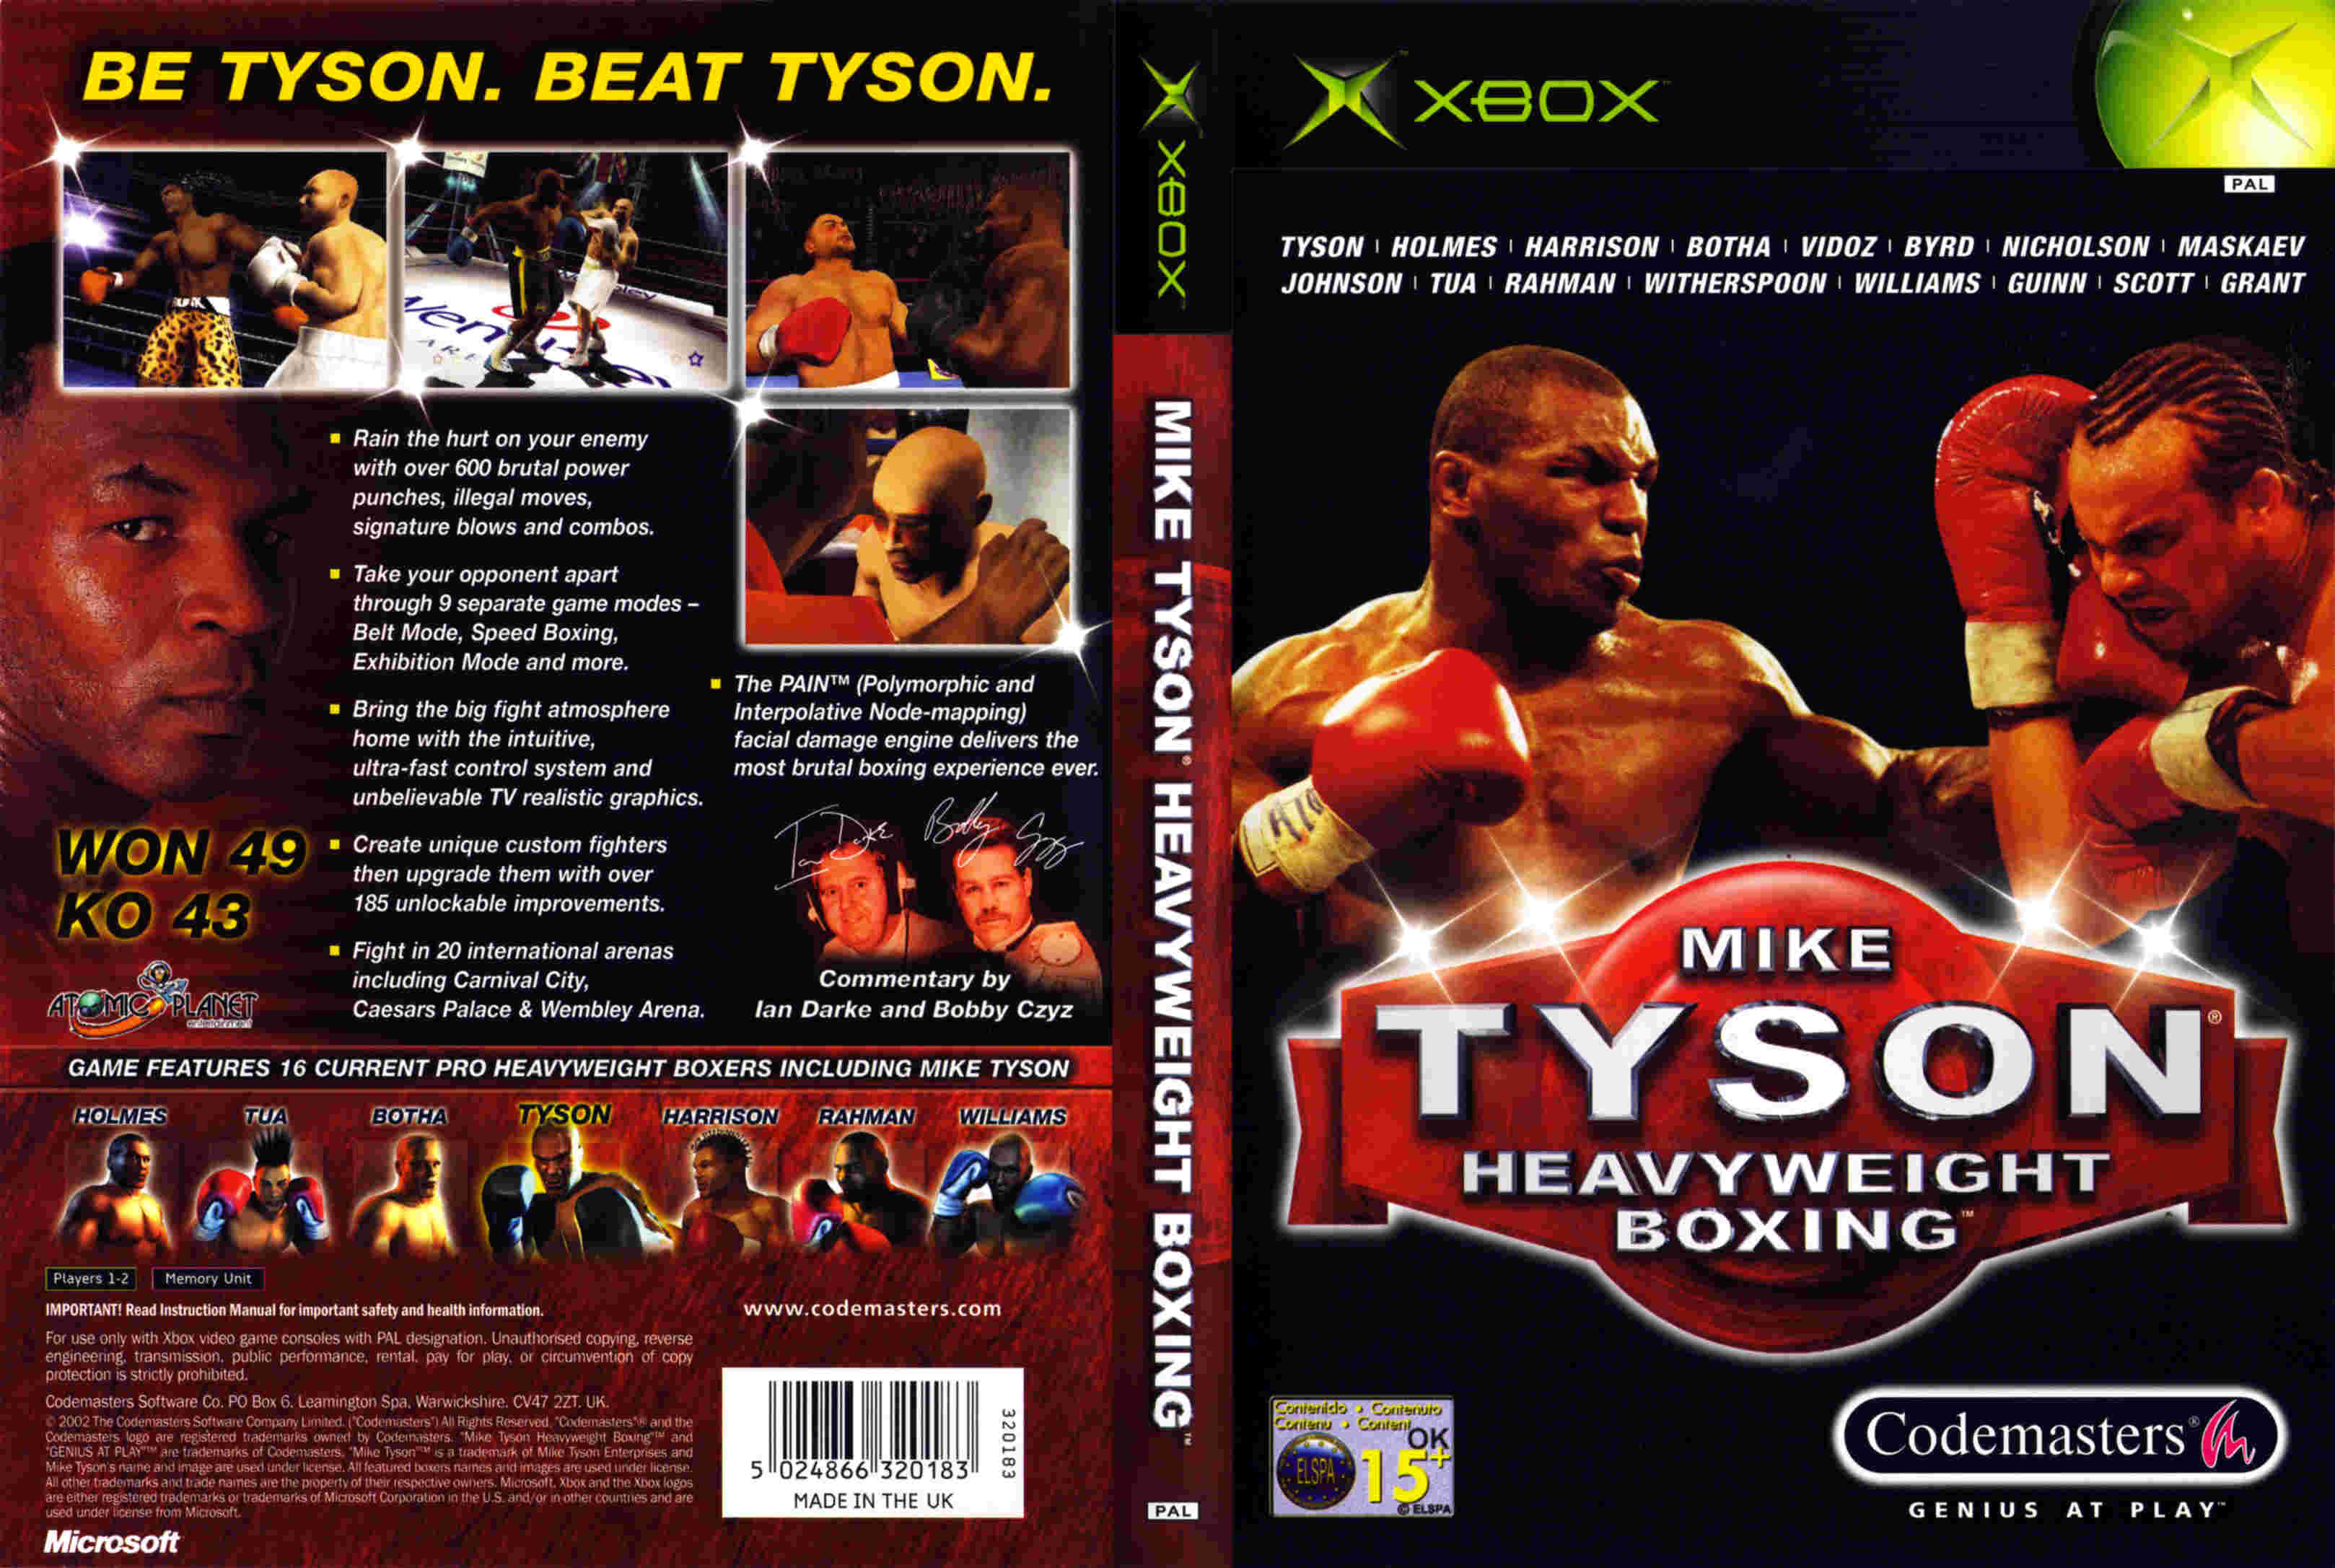 Майк тайсон статистика. График тренировок Майк Тайсон. Mike Tyson Heavyweight Boxing. DVD бокс. Программа тренировок майка Тайсона.